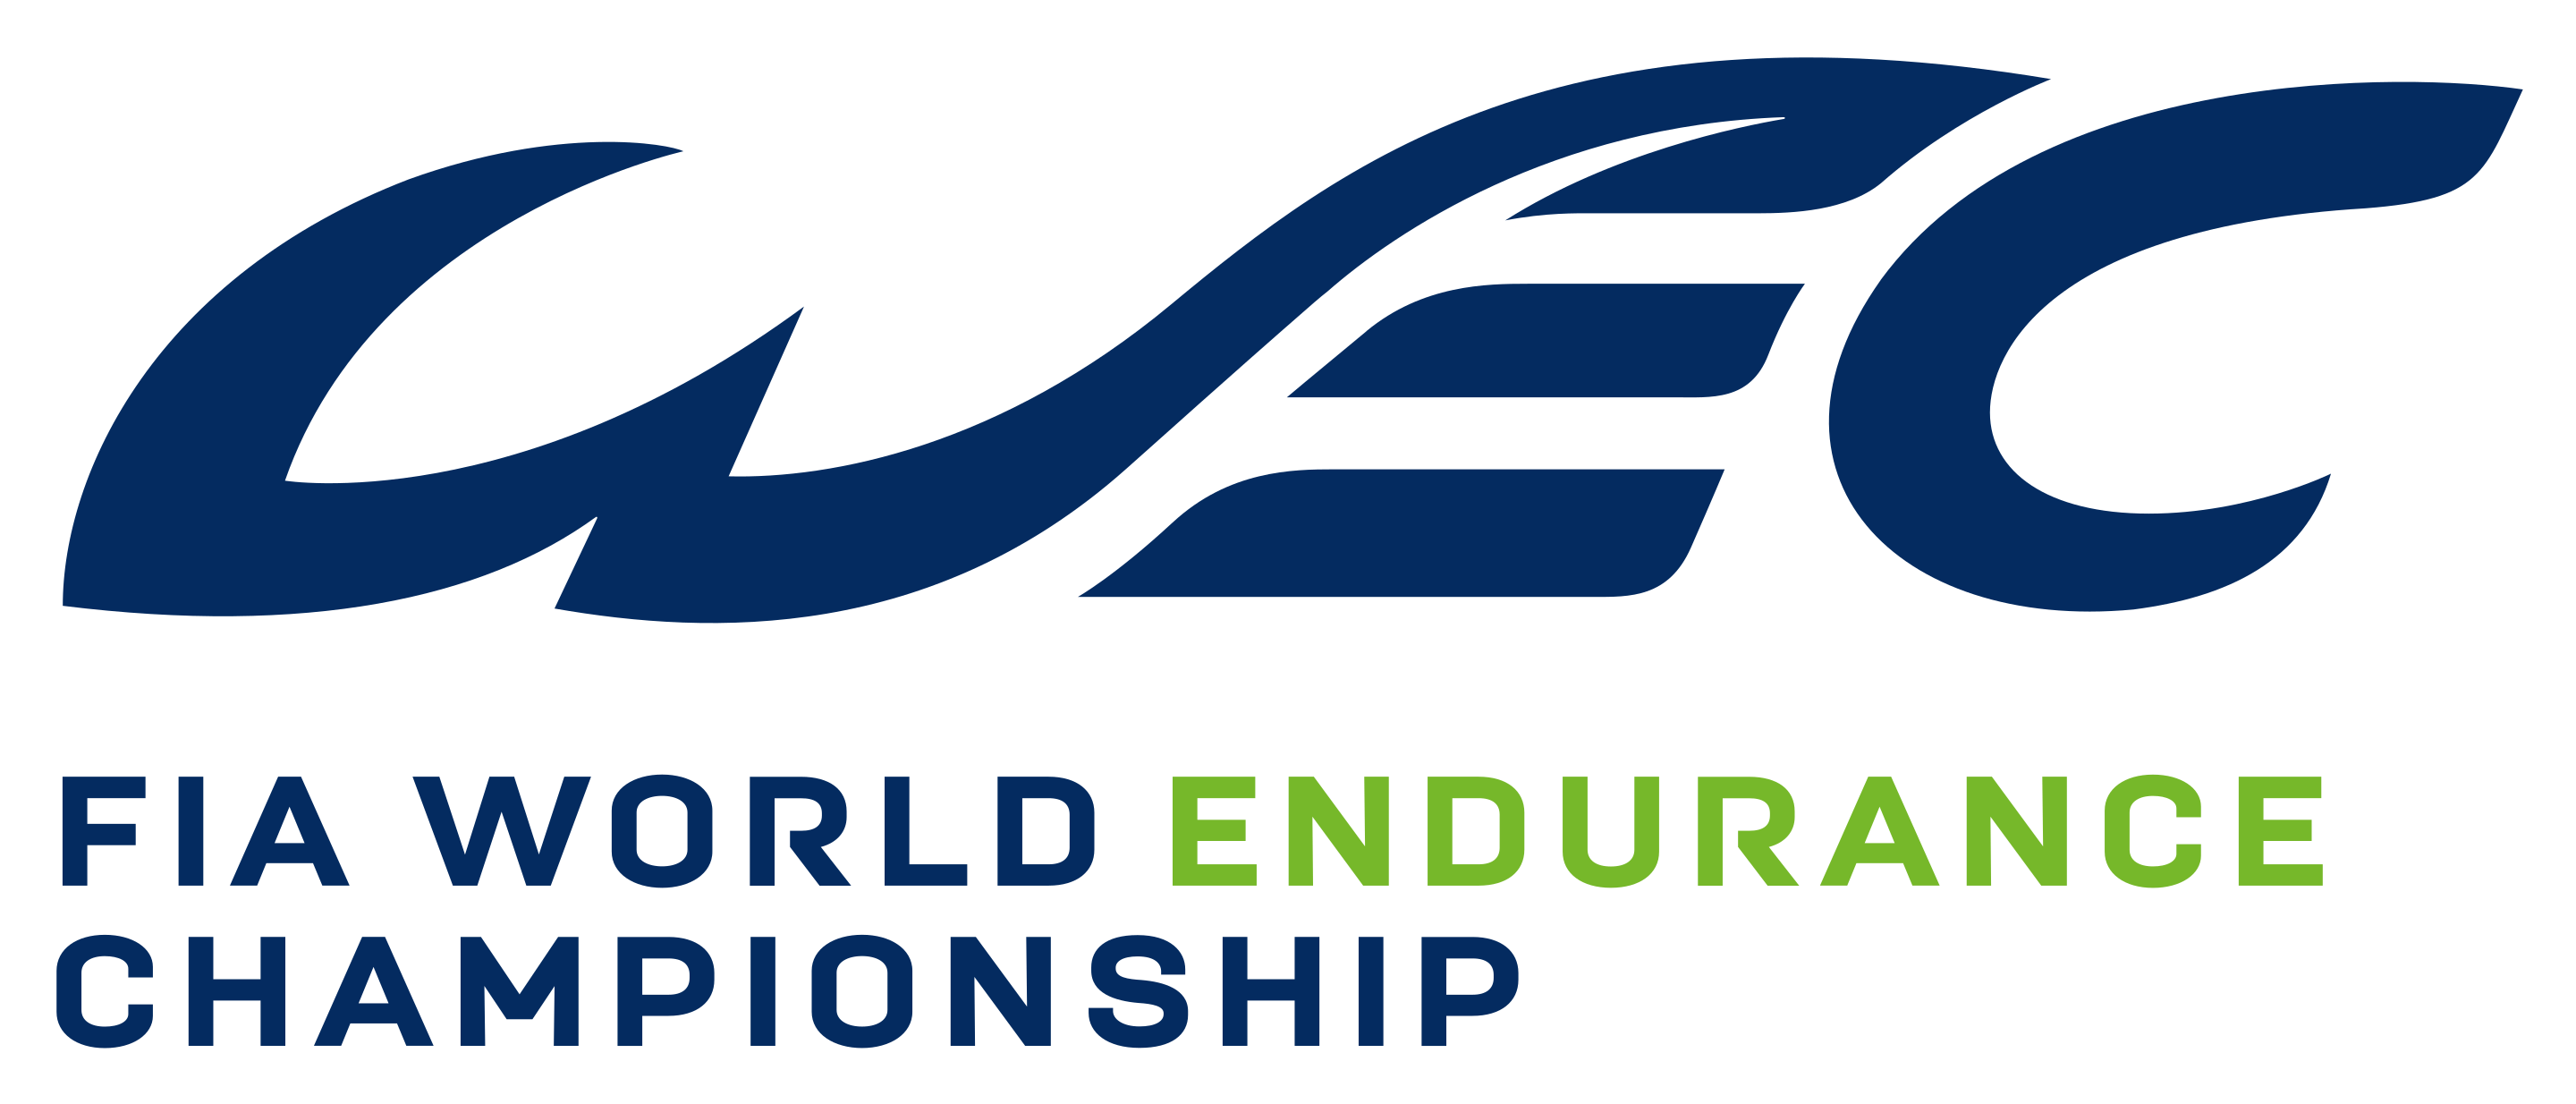 The logo of FIA World Endurance Championship – auto racing championship held worldwide
